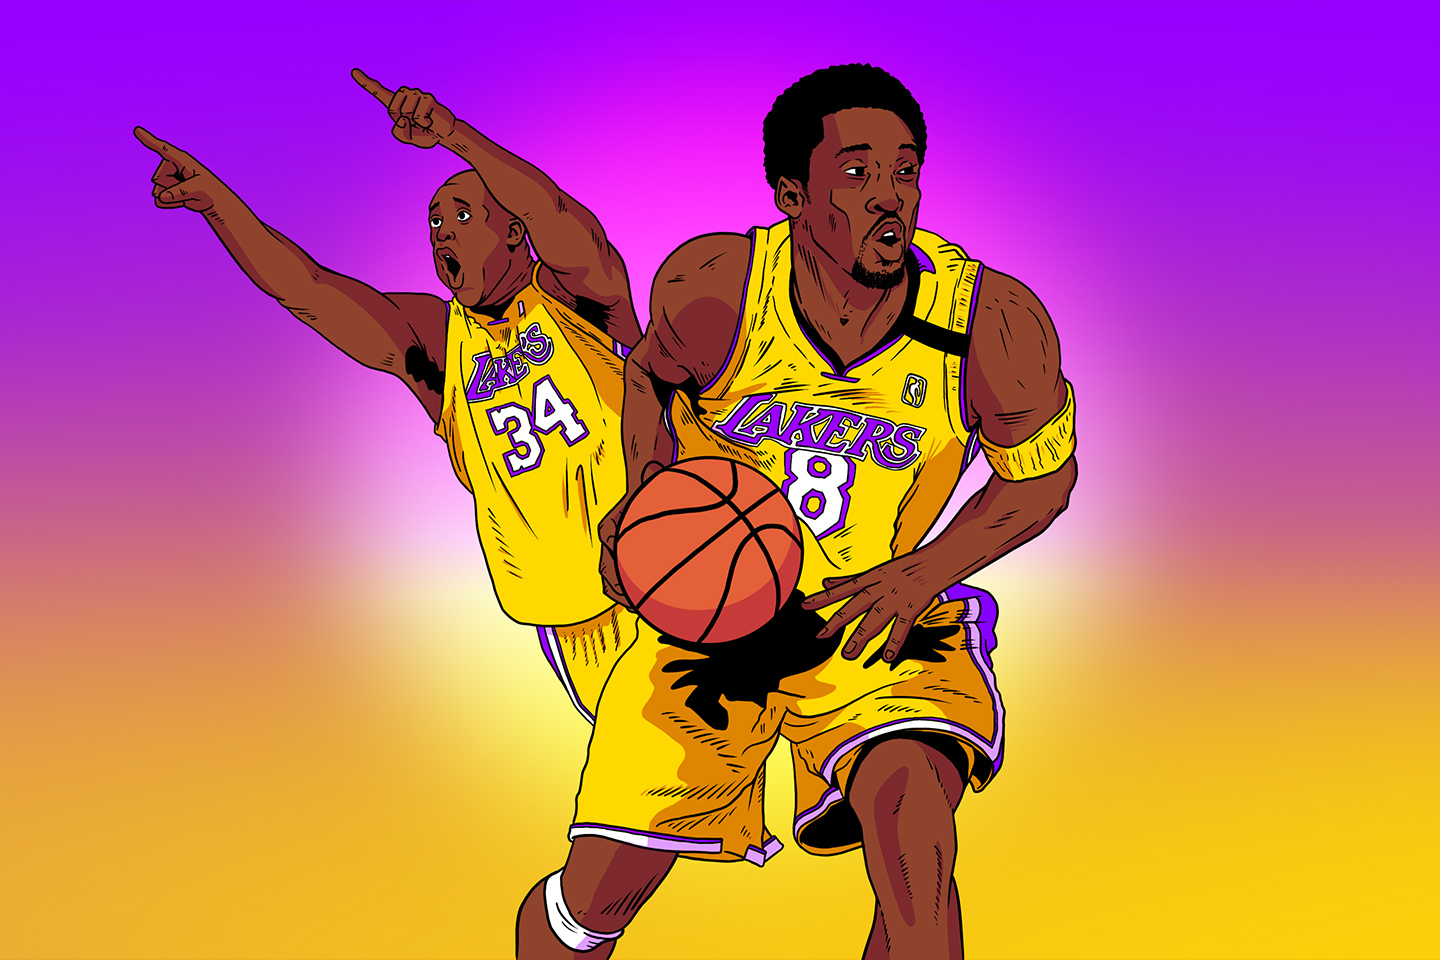 Kobe Bryant / Jermaine O'Neal 1996 Press Pass Draft Pick High